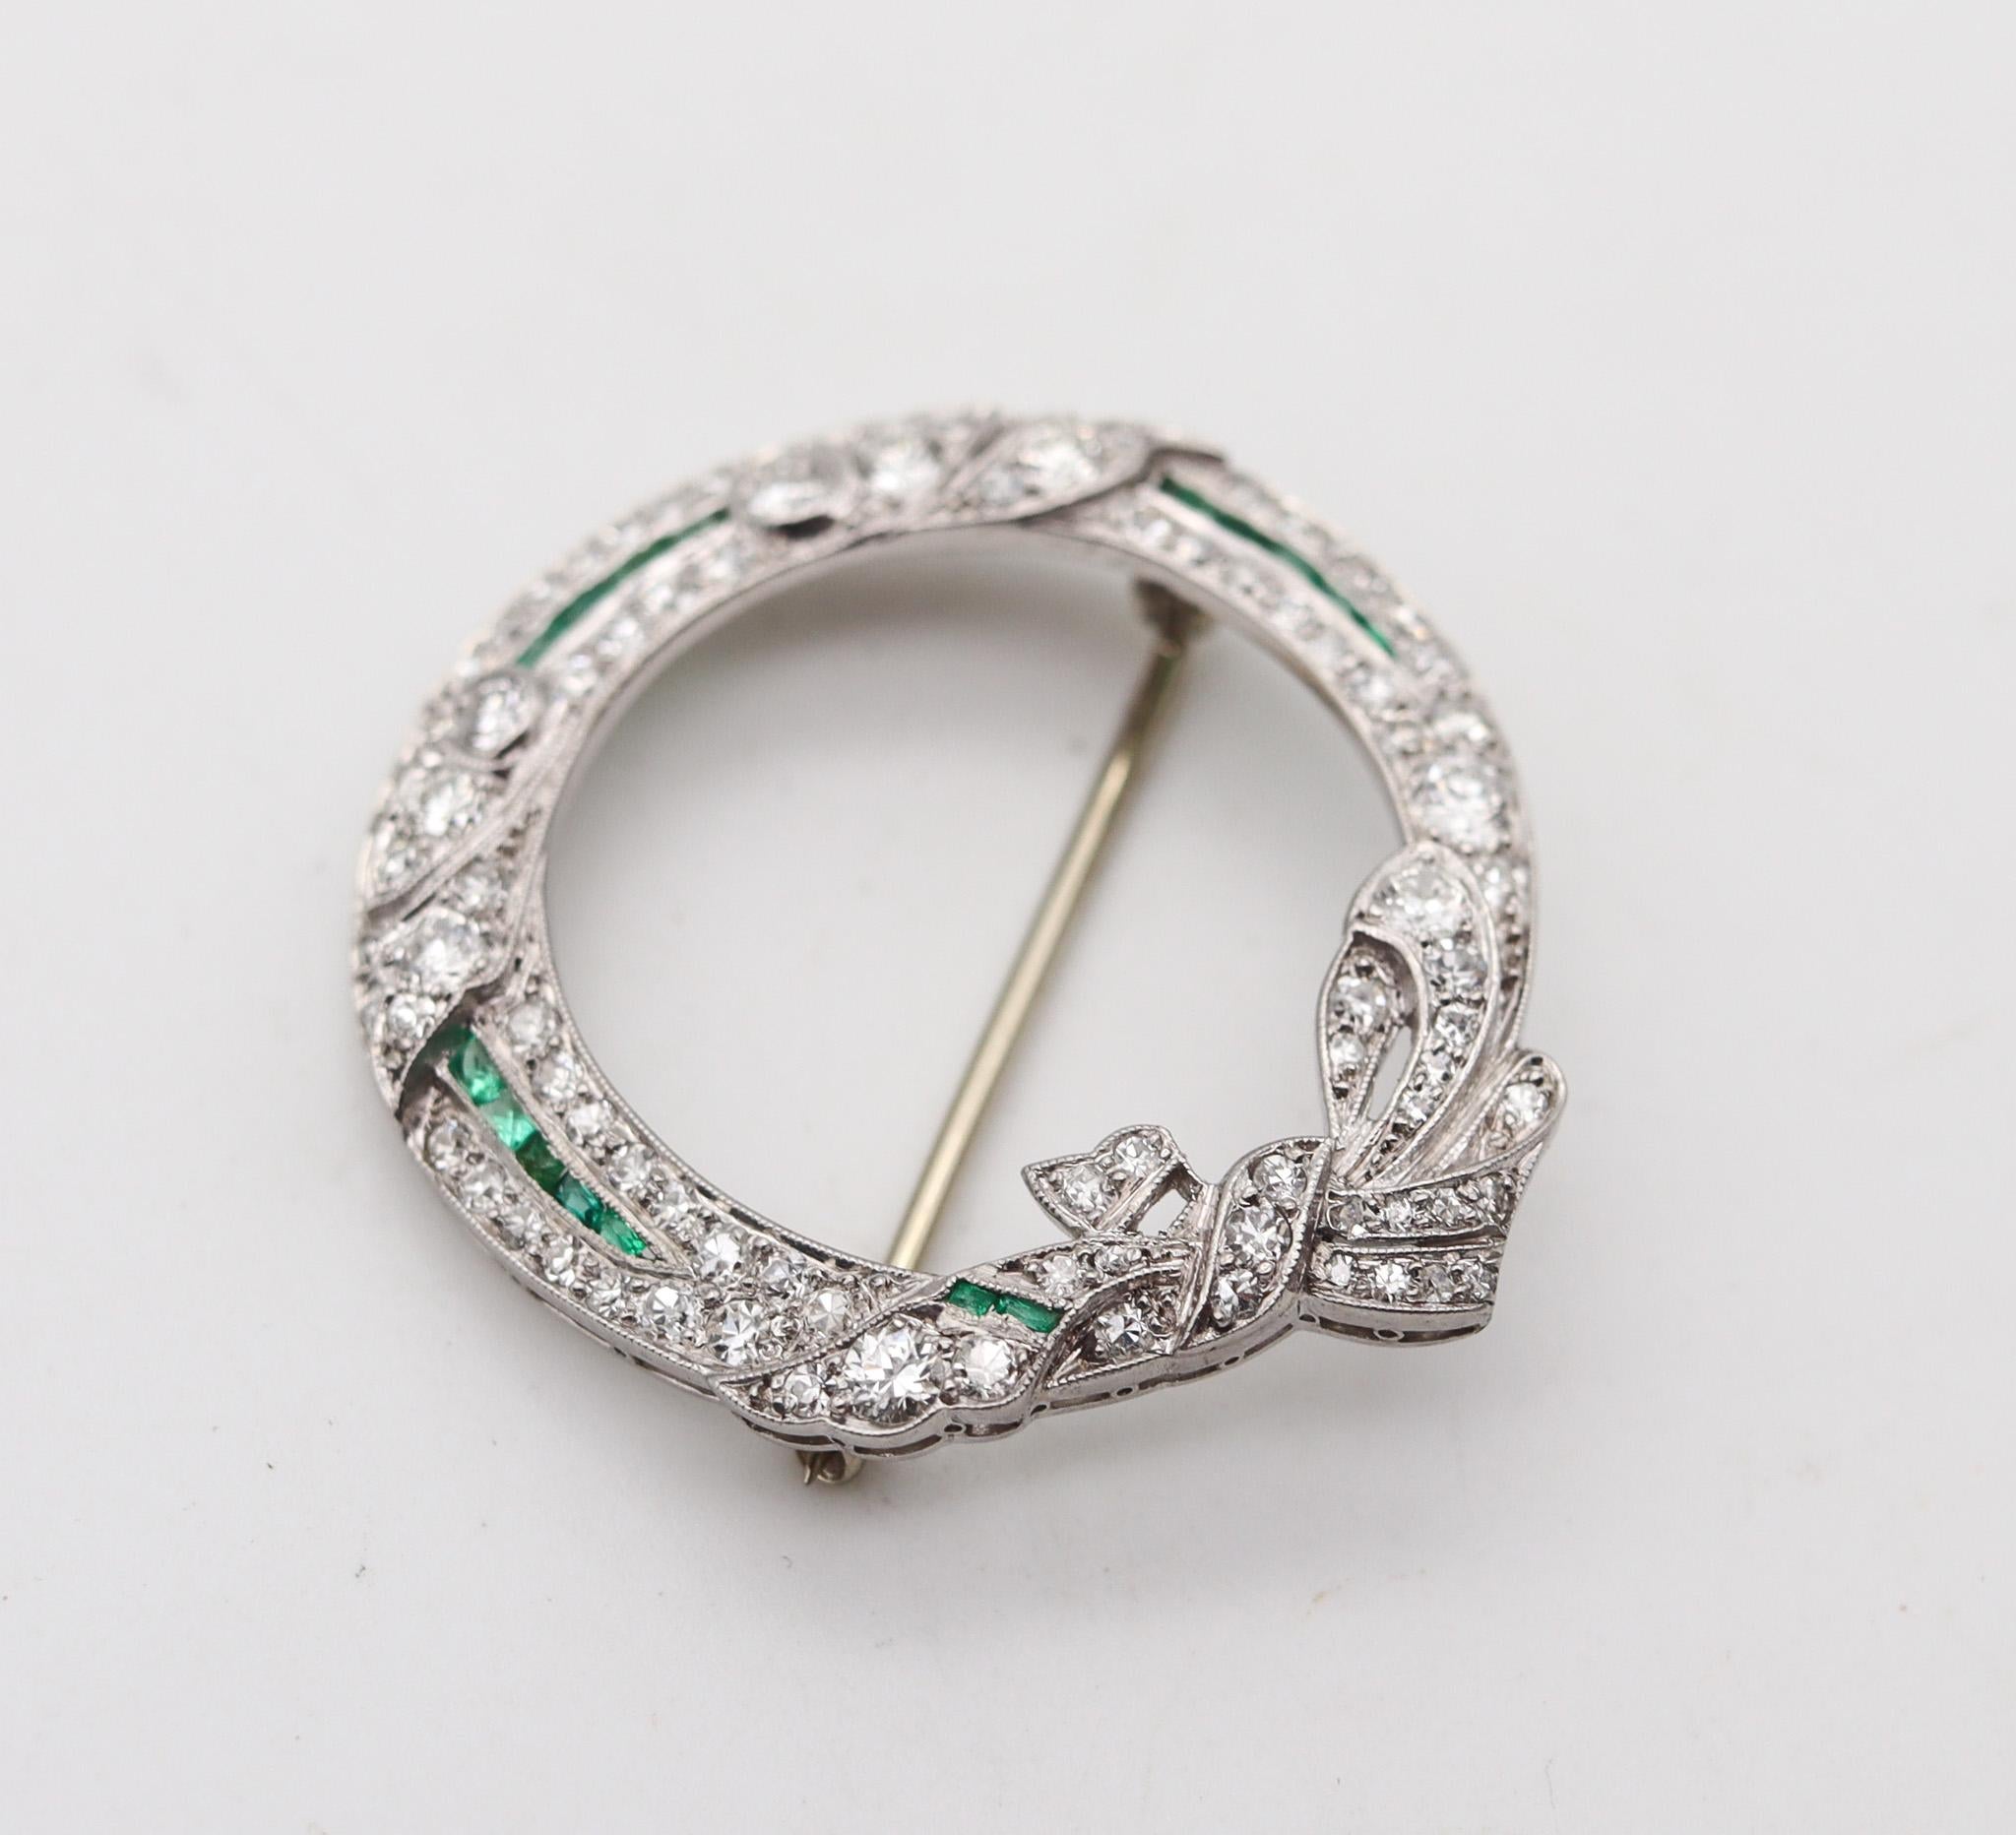 Bailey Banks & Biddle 1925 Art Deco Brooch Platinum 4.74 Cwt. Diamonds & Emerald In Excellent Condition For Sale In Miami, FL